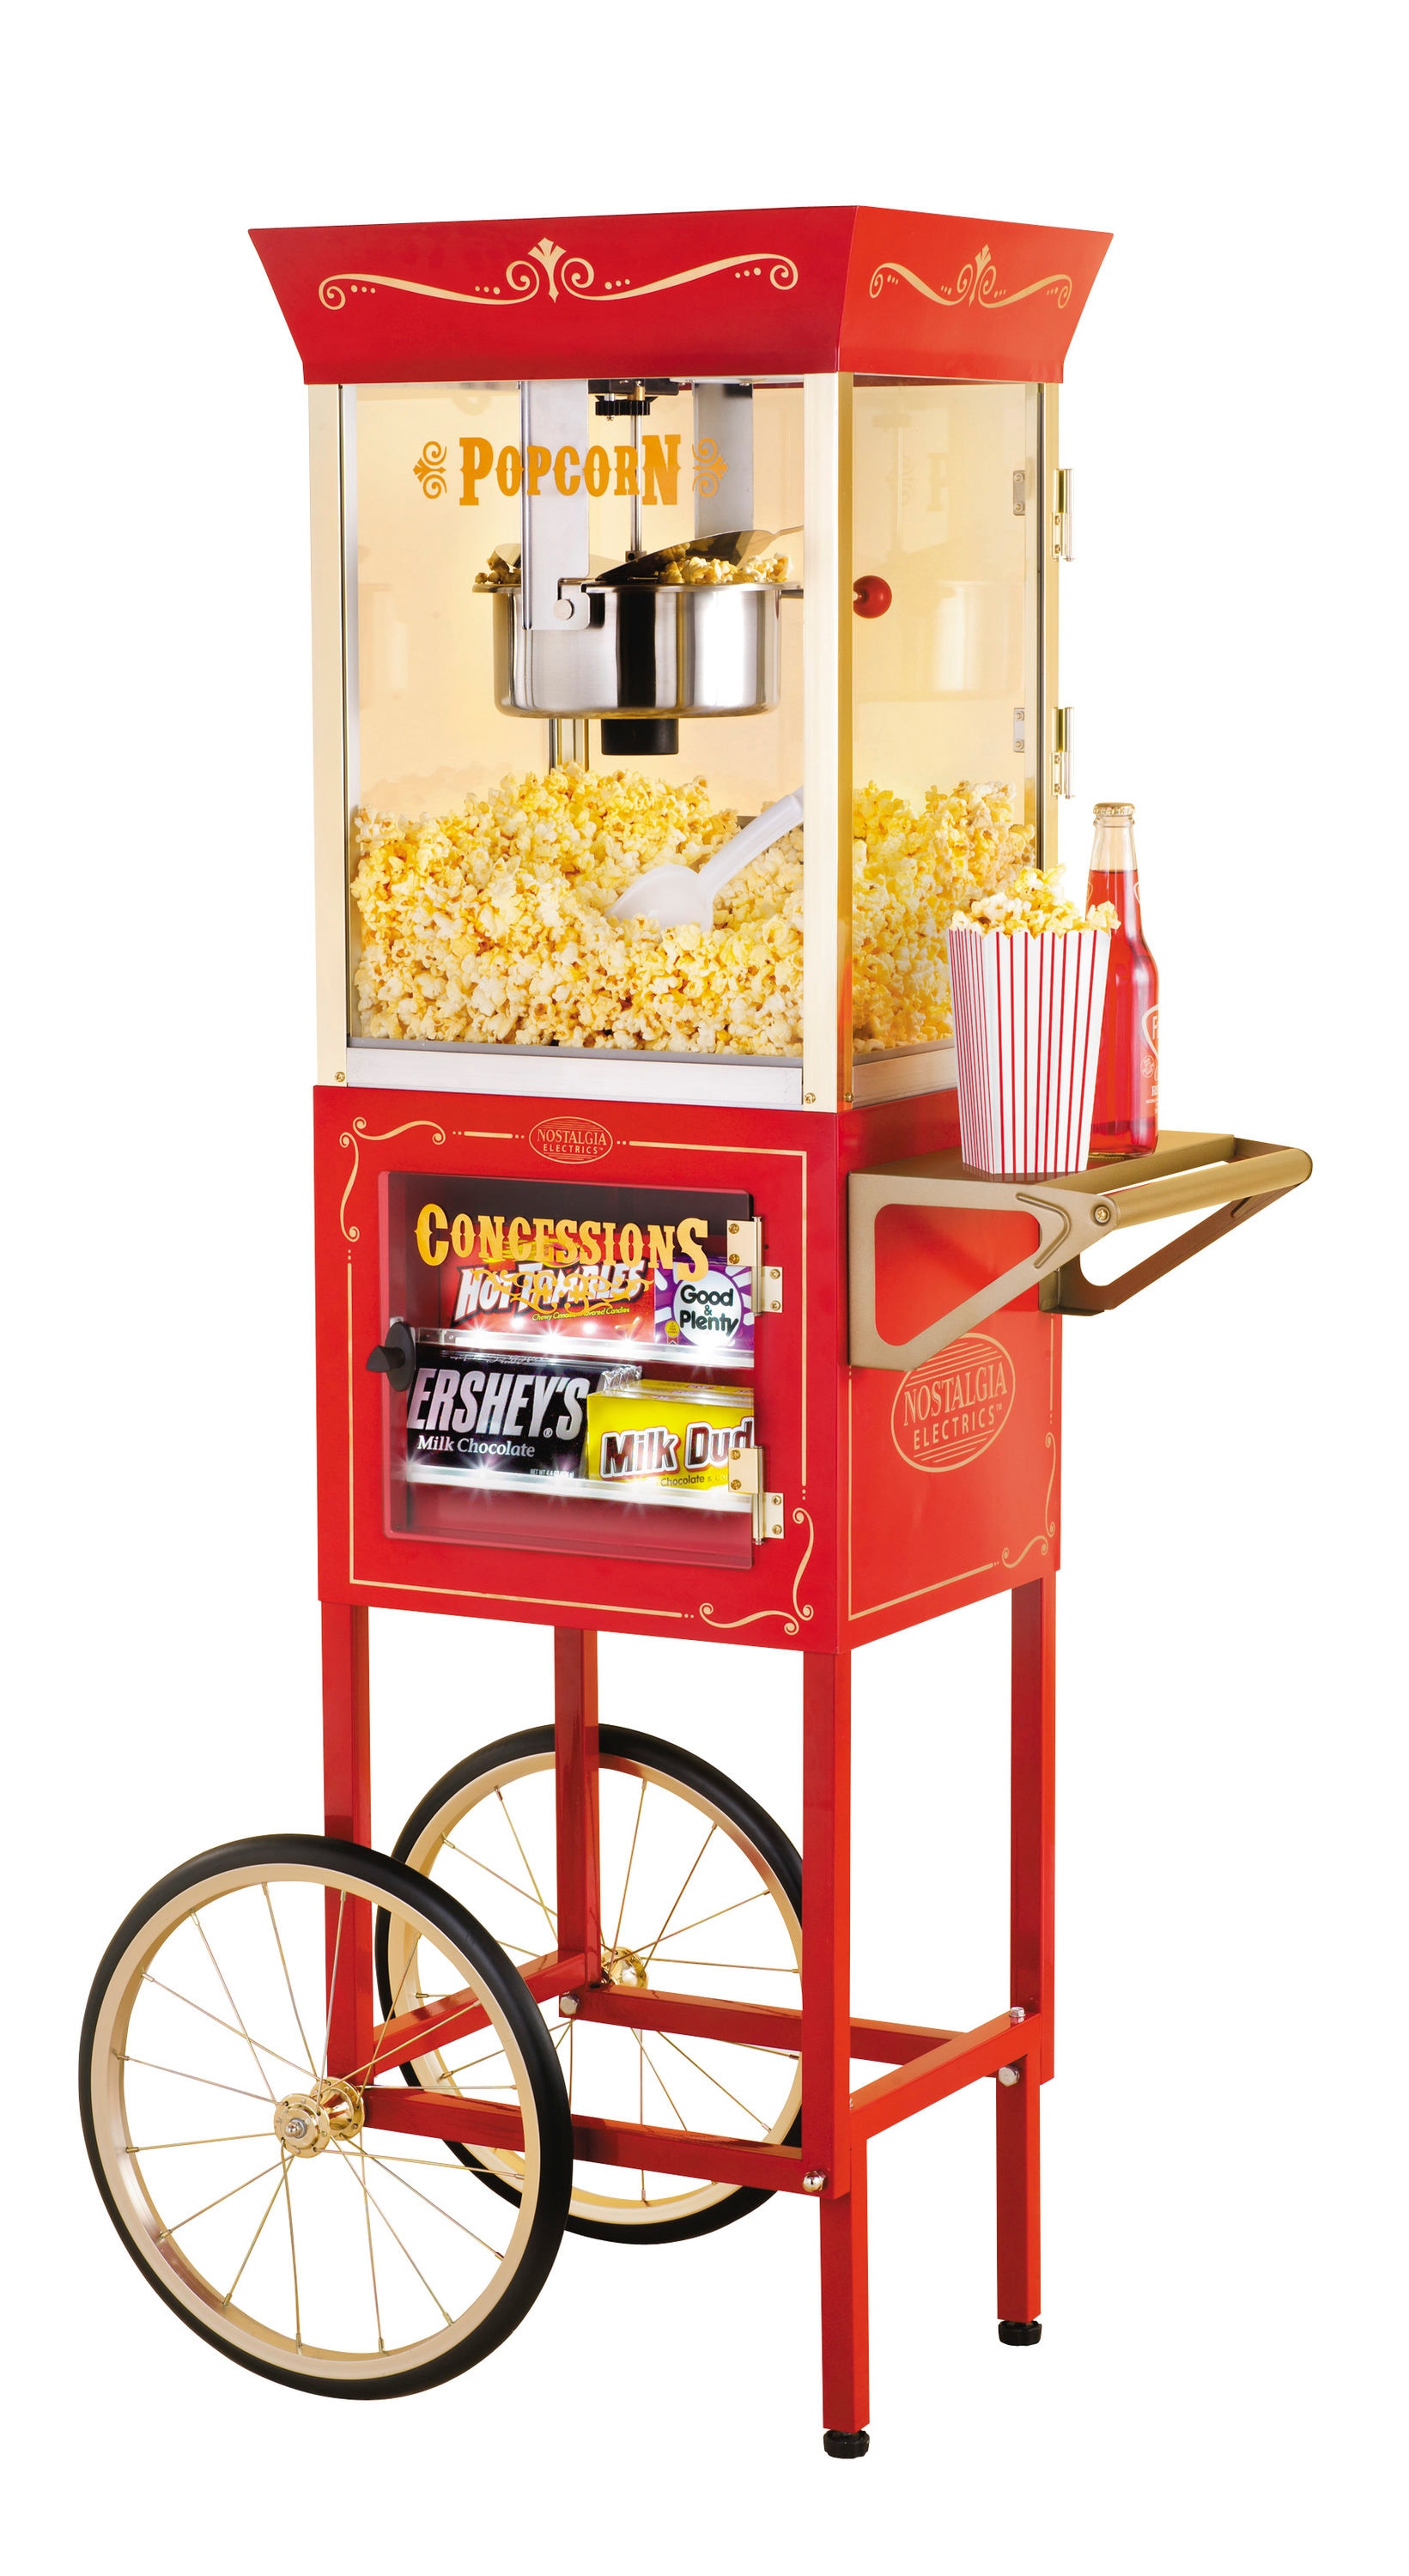 Nostalgia 0.3-Cup Oil Tabletop Popcorn Machine - Red, Pops 10 Cups per  Batch, UL Safety Listed, Dishwasher-Safe Parts